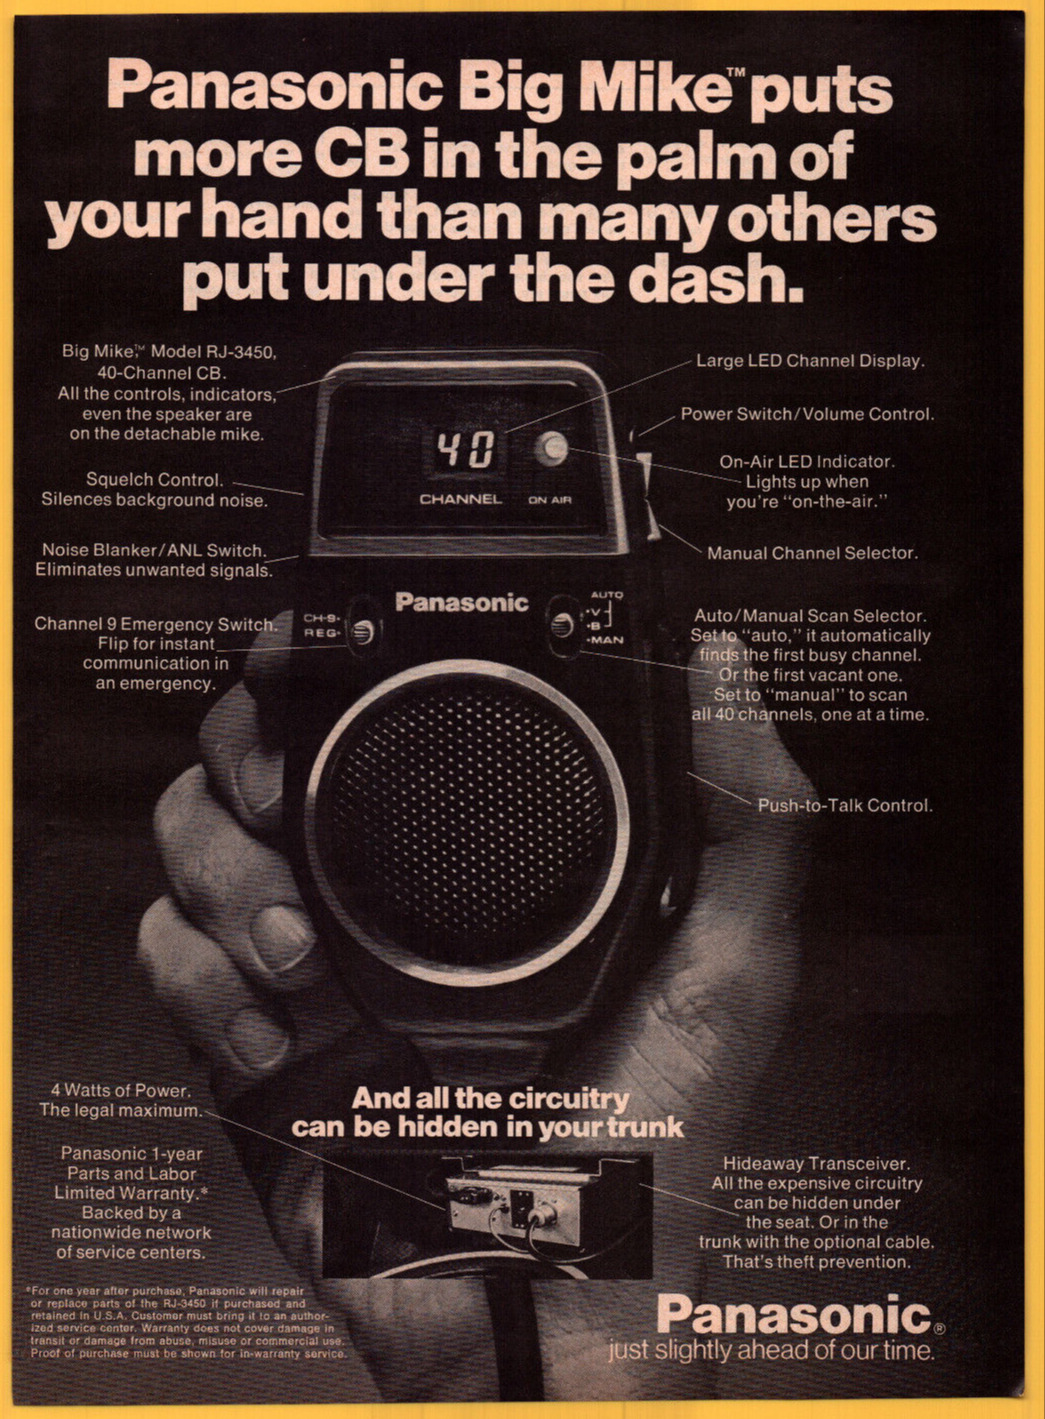 Panasonic Big Mike RJ-3450 CB Radio - Print Ad / Poster Promo Art 1977